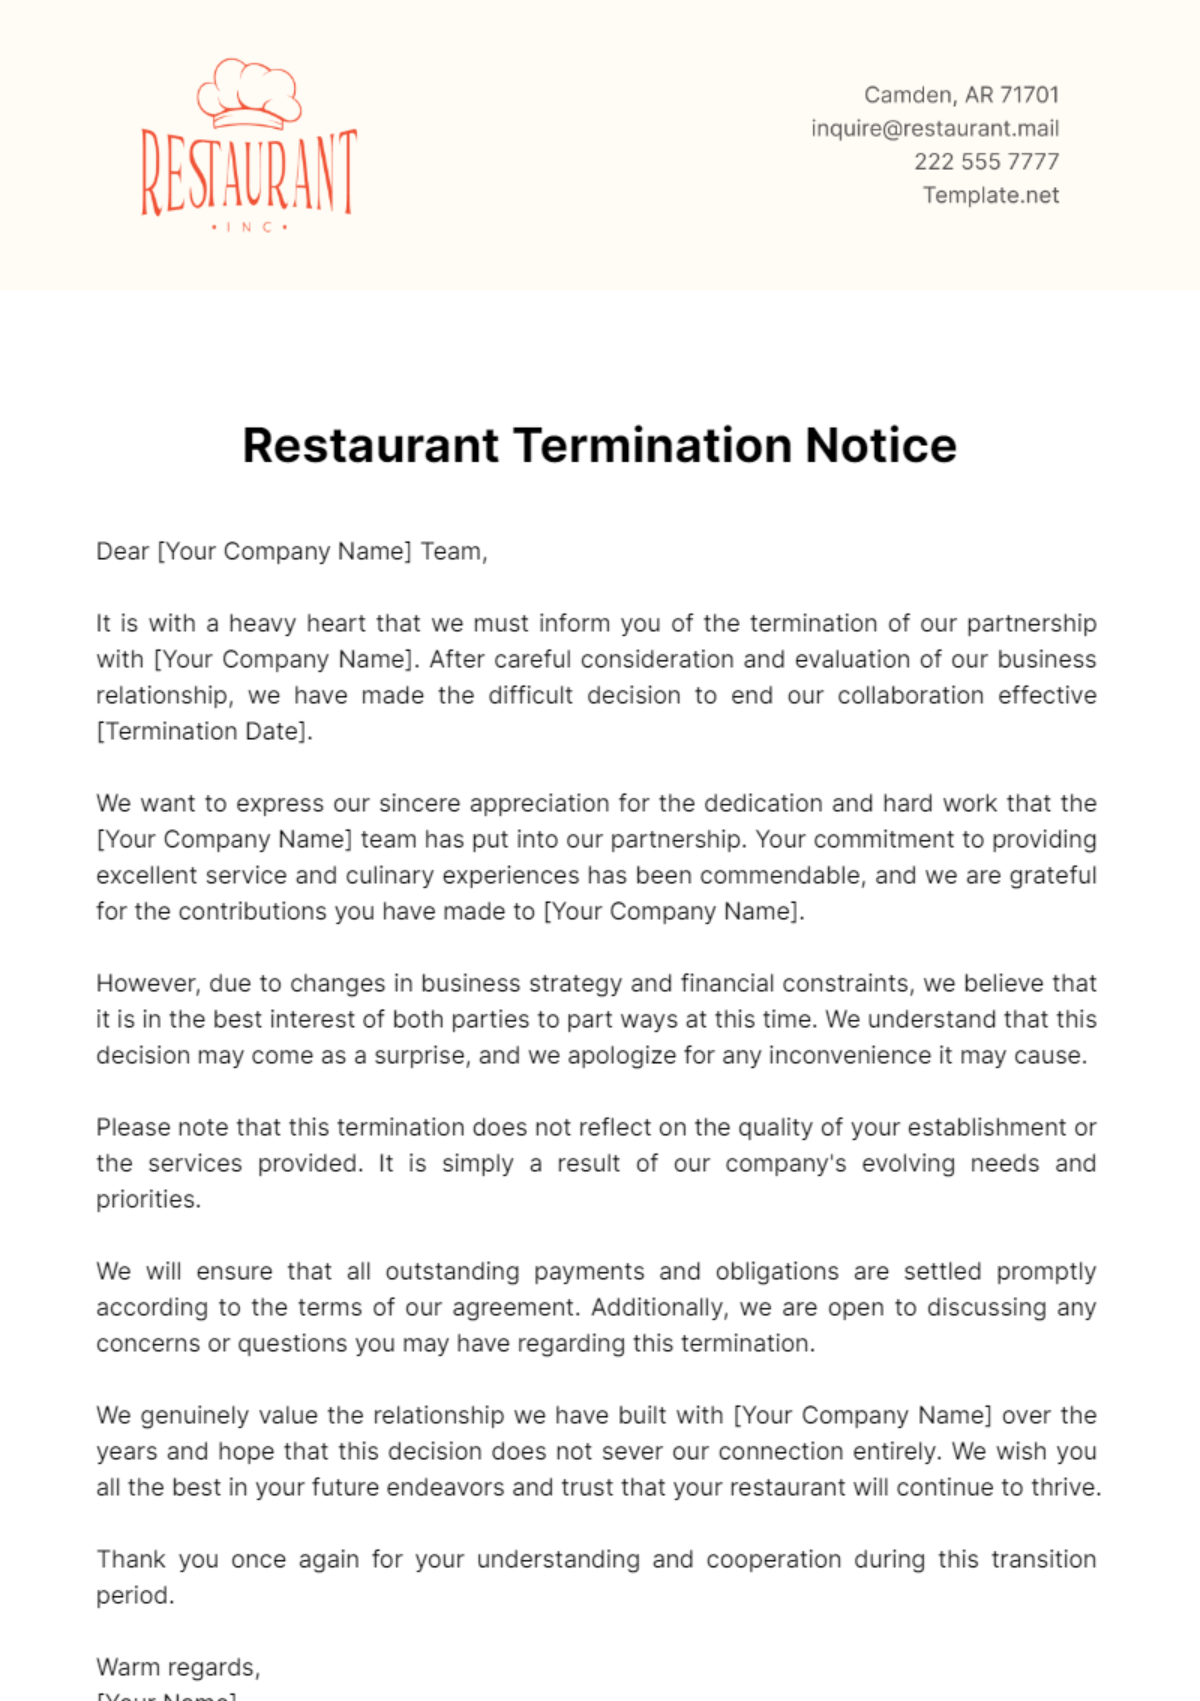 Free Restaurant Termination Notice Template